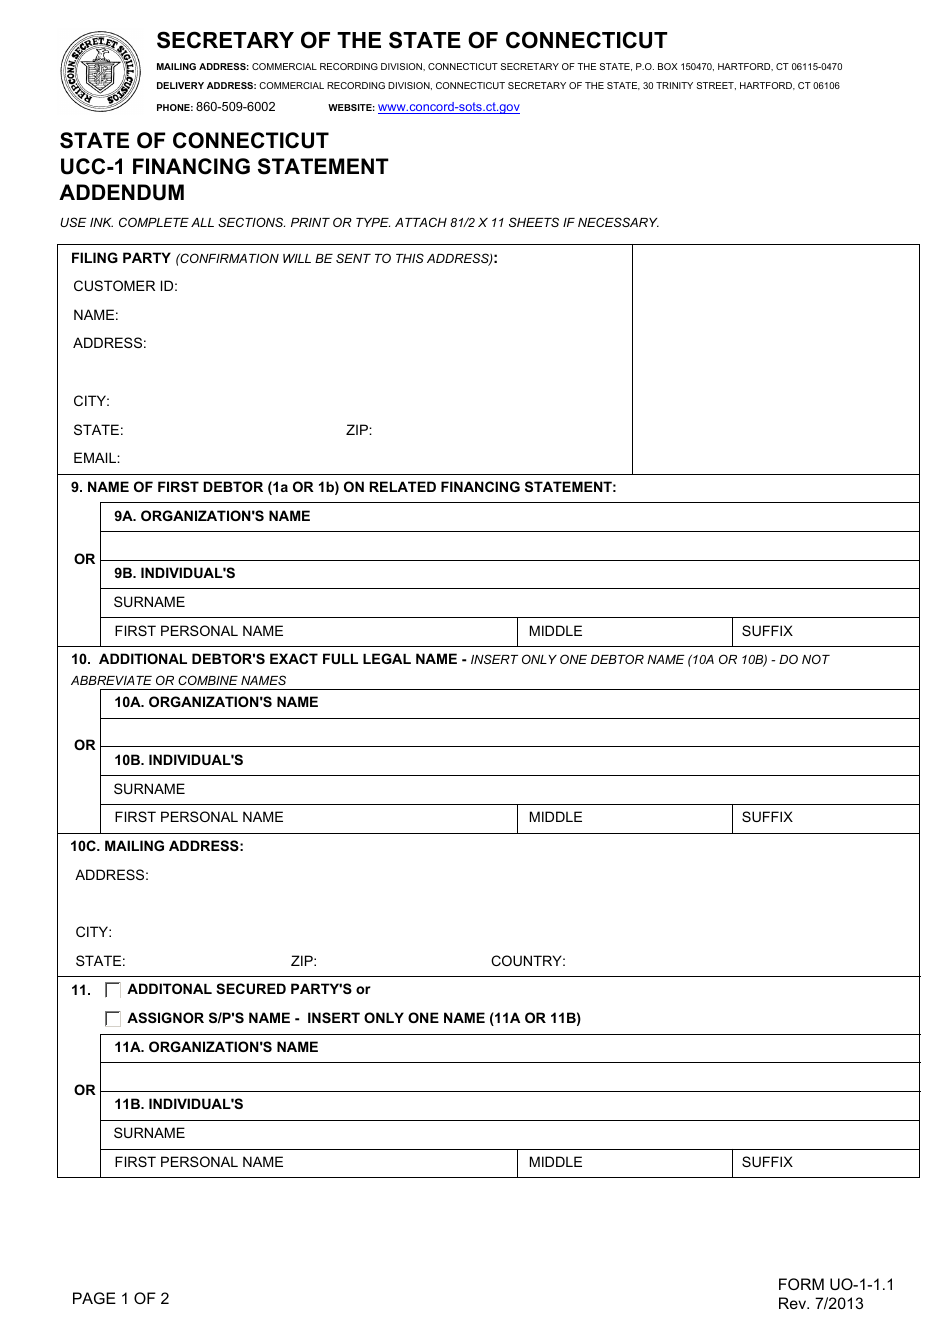 Form UO-1.1.1 Ucc-1 Financing Statement Addendum - Connecticut, Page 1